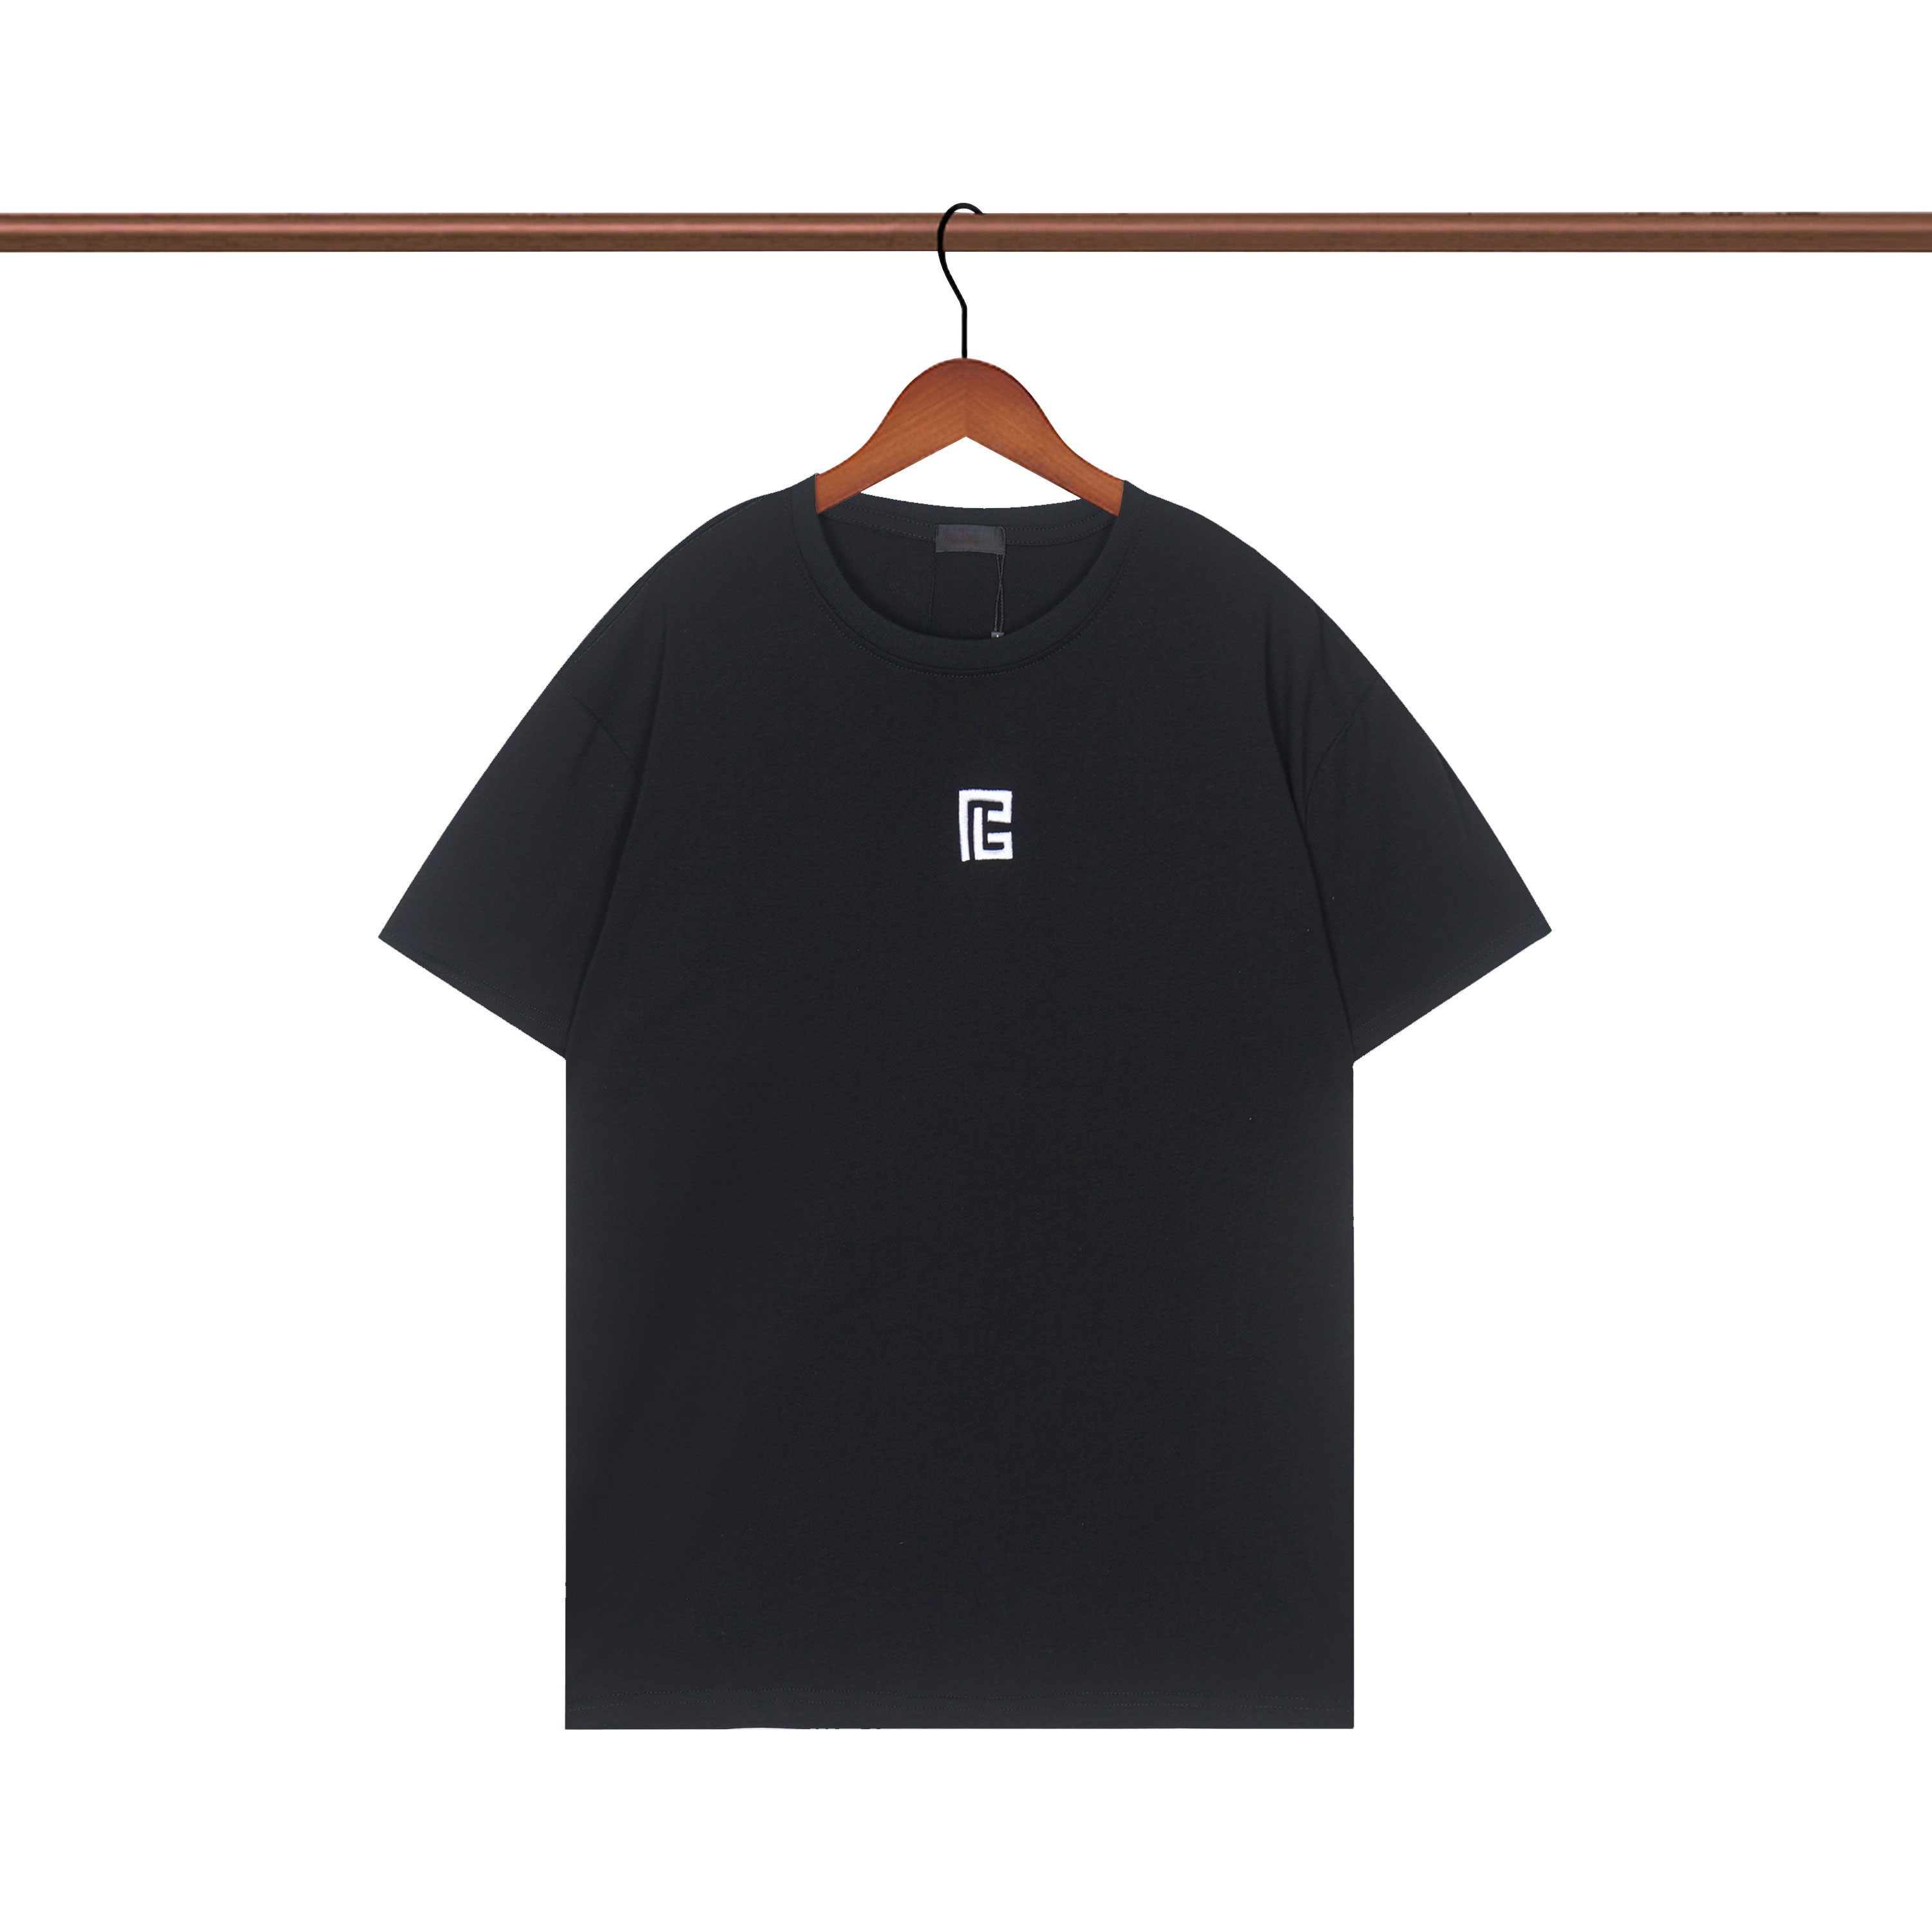 

Mens Designer T Shirt Men Women Luxury Brand Short Sleeve Hip Hop Style Bests Quality T-shirts Size S-2XL, Bag(just a bag no tshirts)